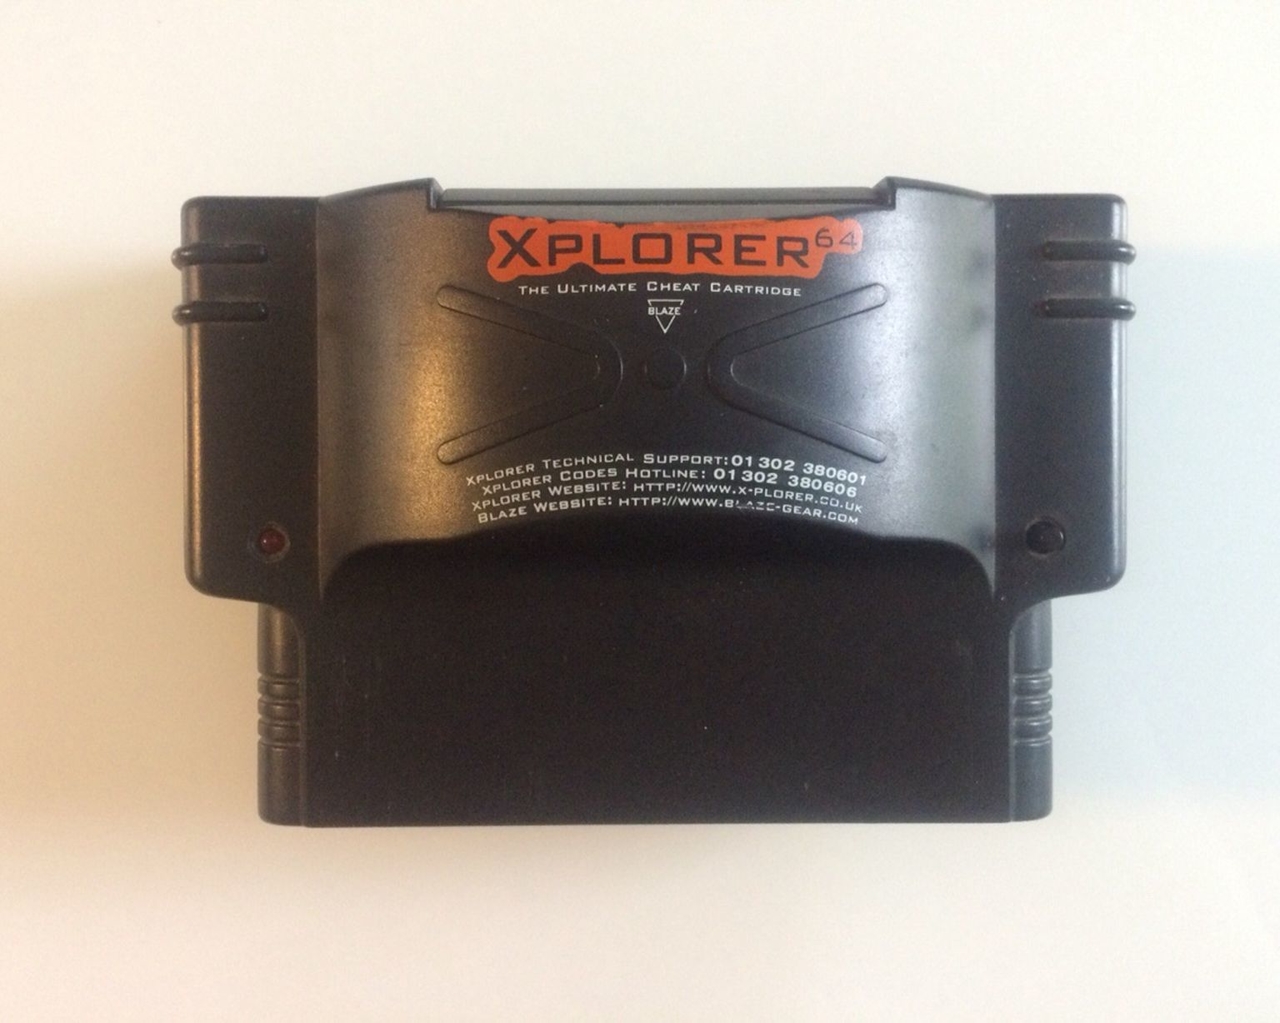 Xplorer 64 Nintendo 64 Cheat Cart - Nintendo 64 Hardware